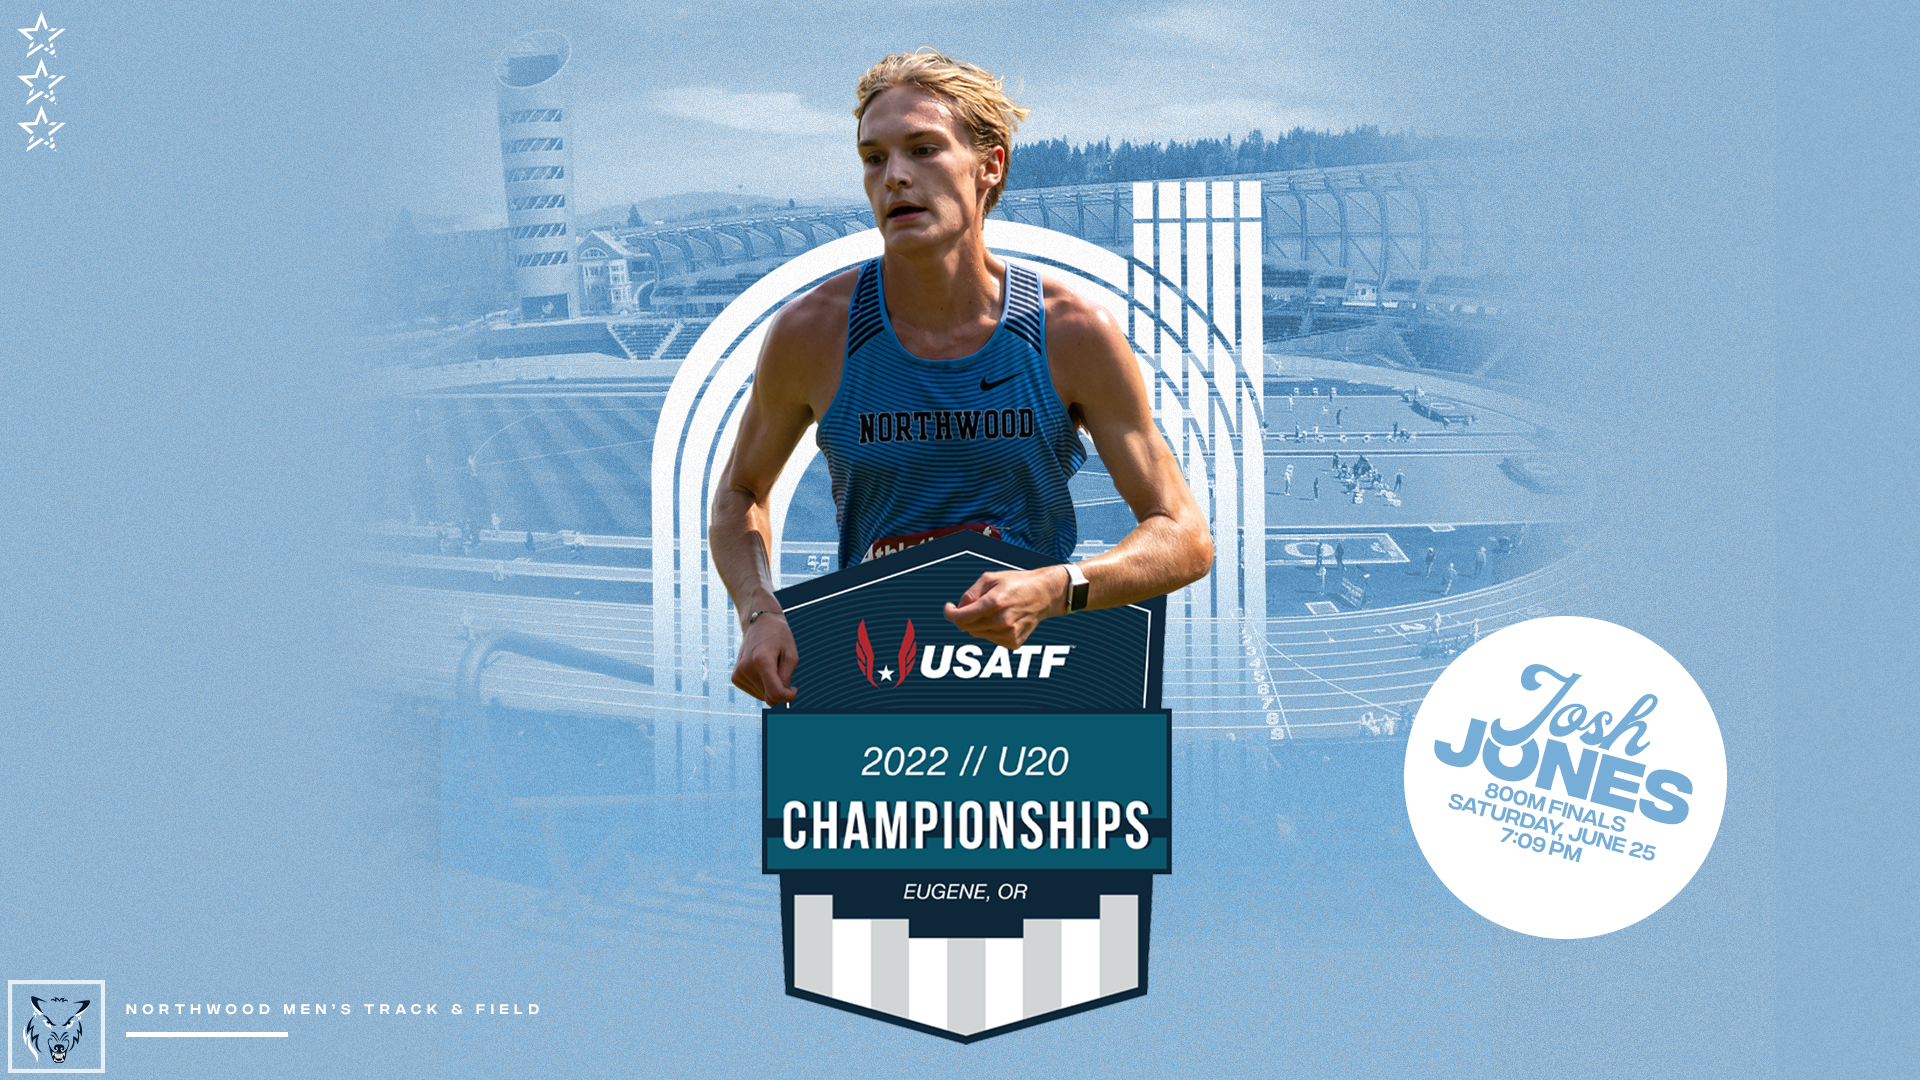 Josh Jones Is Set To Represent Northwood At The U20 U.S. Track & Field Championships